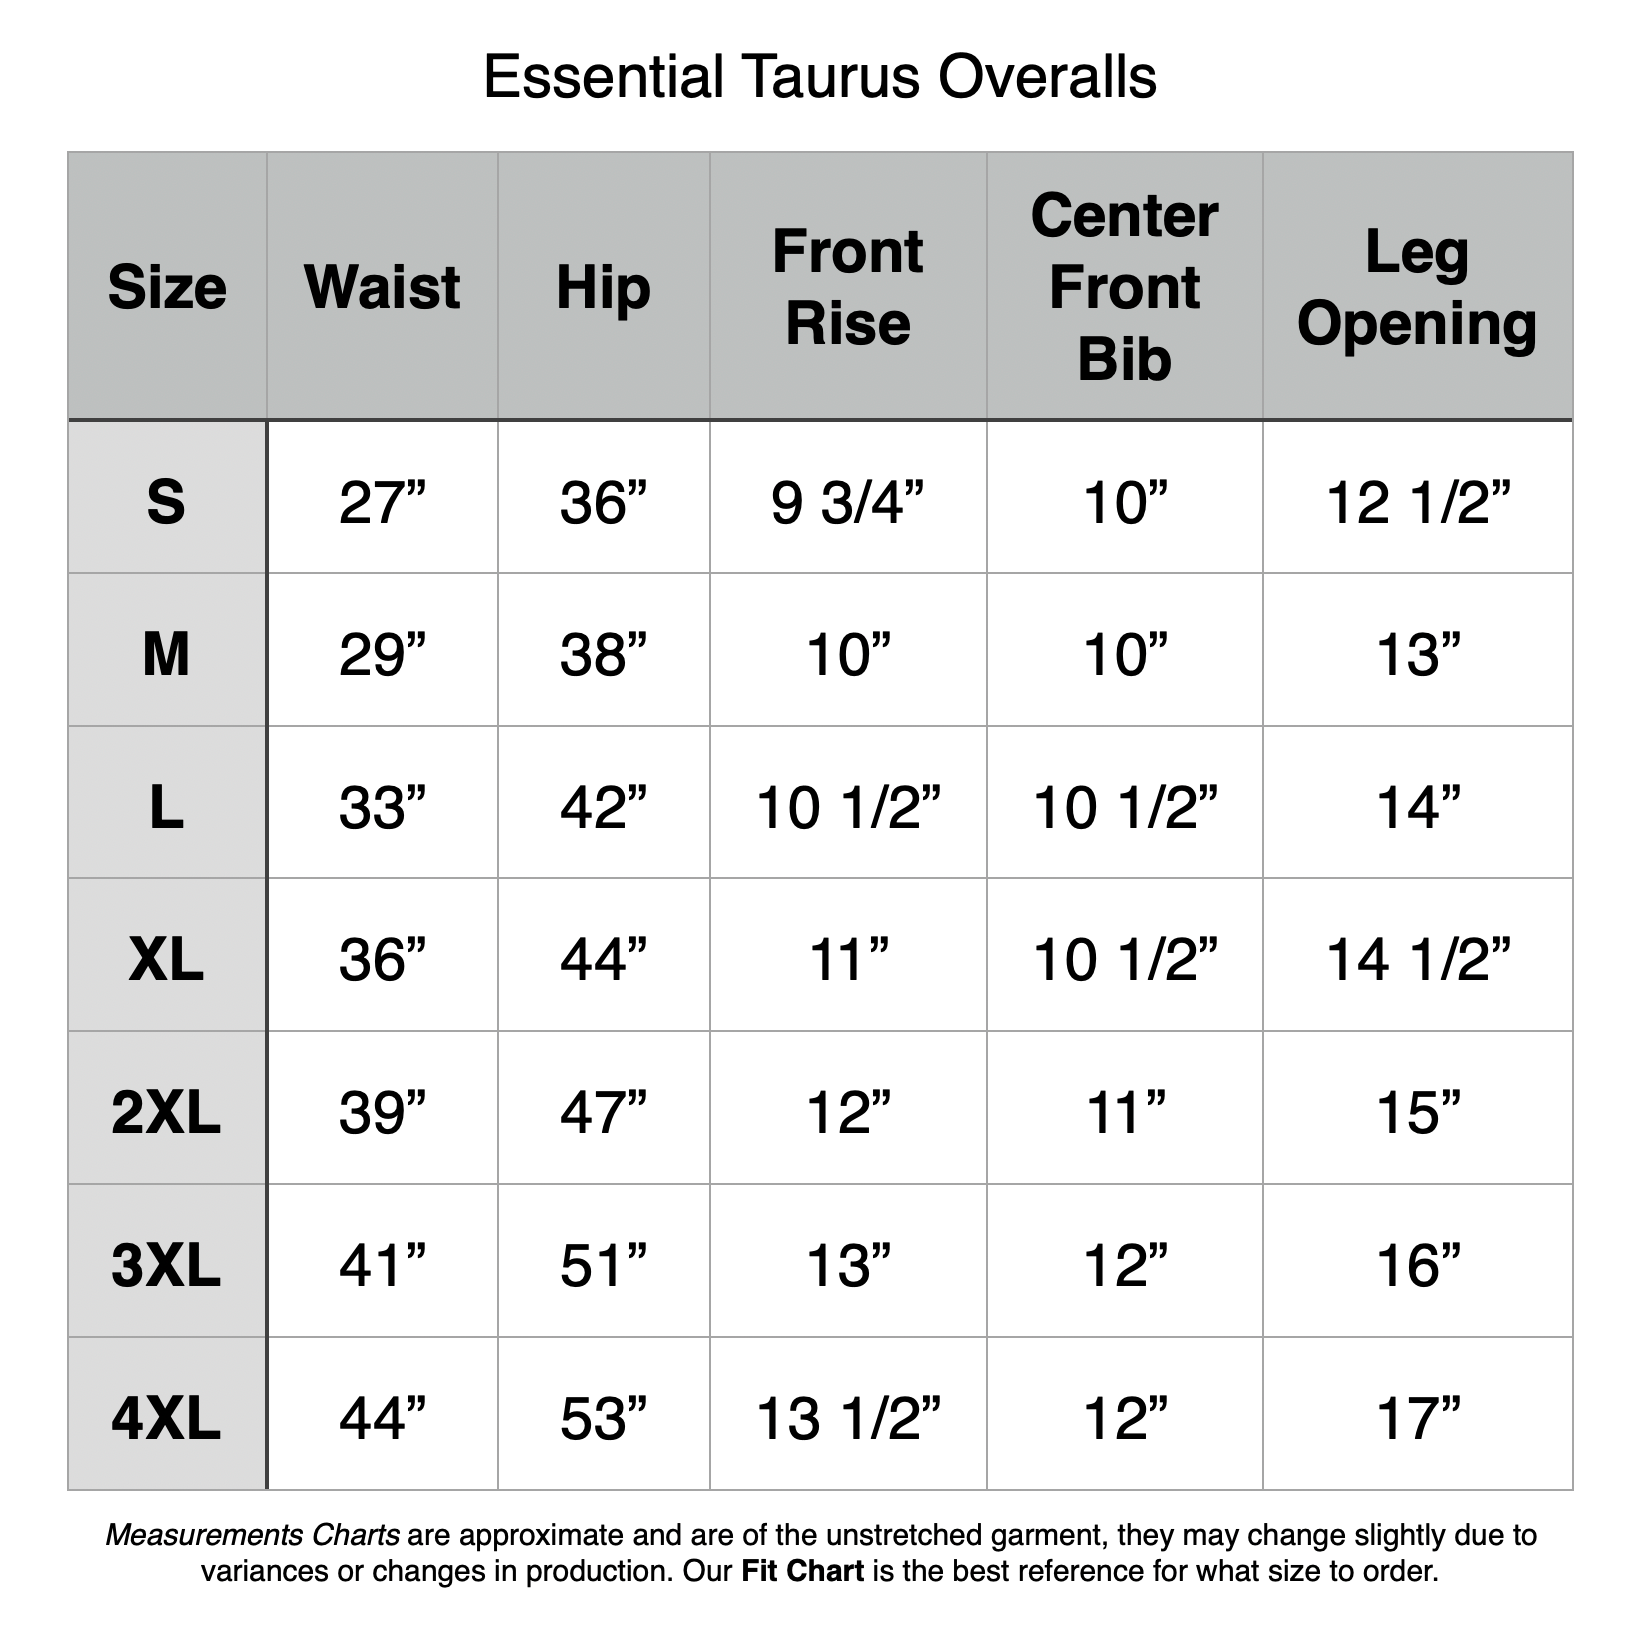 Taurus Overalls: S - 27” Waist, 36” Hip, 9.75” Ft Rise, 10” Center Bib, 12.5” Leg. M - 29” Waist, 38” Hip, 10” Ft Rise, 10” Center Bib, 13” Leg. L - 33” Waist, 42” Hip, 10.5” Ft Rise, 10.5” Center Bib, 14” Leg. XL - 36” Waist, 44” Hip, 11” Ft Rise, 10.5” Center Bib, 14.5” Leg. 2XL - 39” Waist, 47” Hip, 12” Ft Rise, 11” Center Bib, 15” Leg. 3XL - 41” Waist, 51” Hip, 13” Ft Rise, 12” Center Bib, 16” Leg. 4XL - 44” Waist, 53” Hip, 13.5” Ft Rise, 12” Center Bib, 17” Leg.